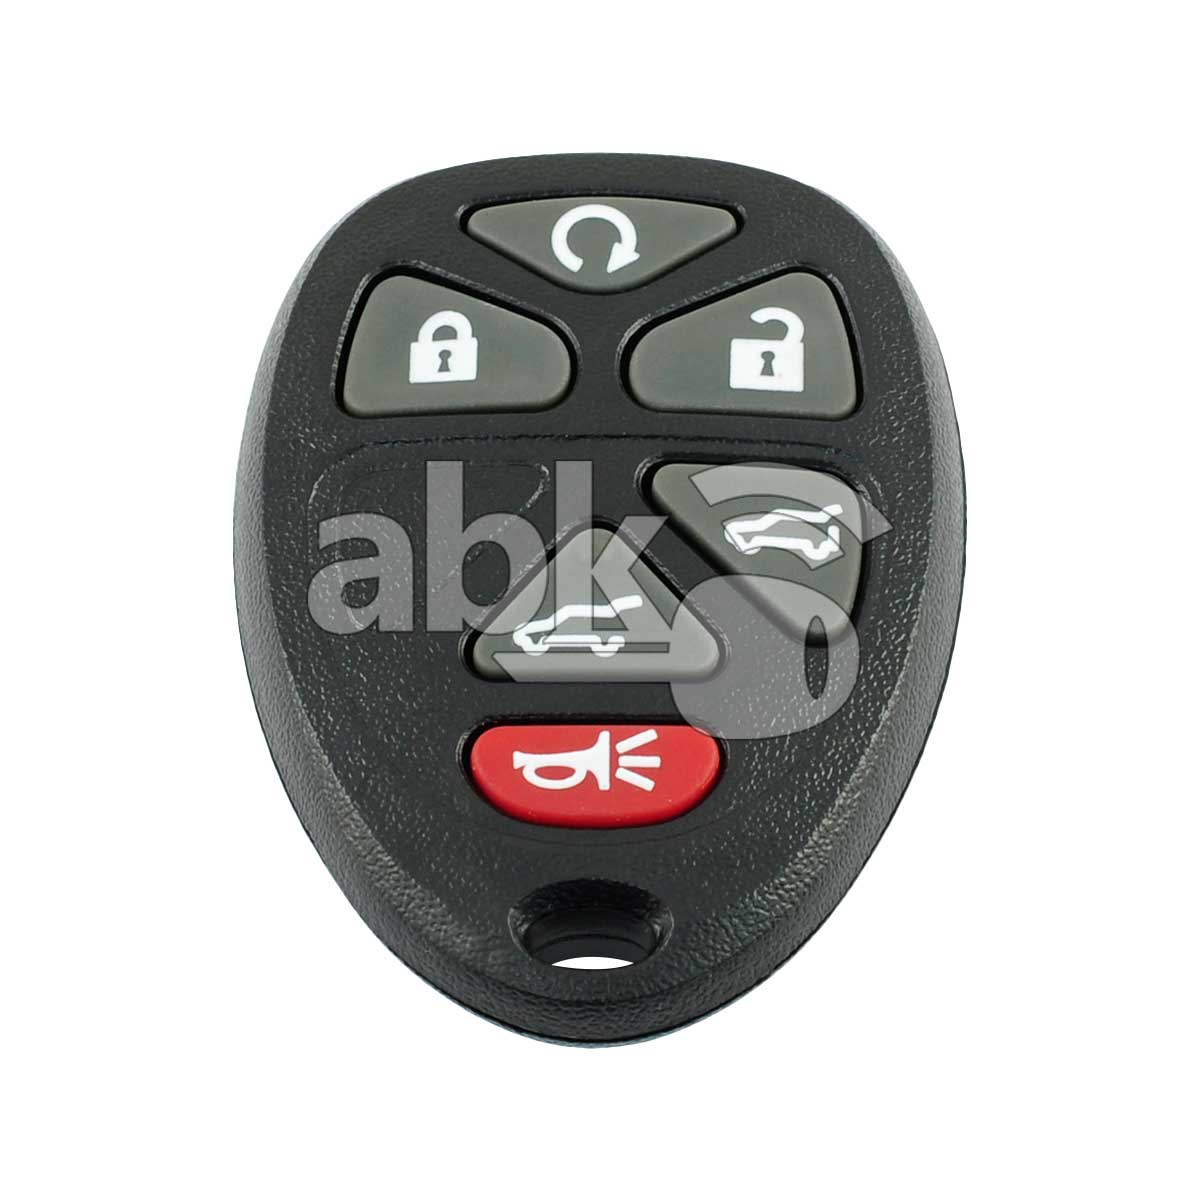 Gmc Chevrolet Cadillac 2007+ Remote Control Cover 6Buttons - ABK-2713 - ABKEYS.COM